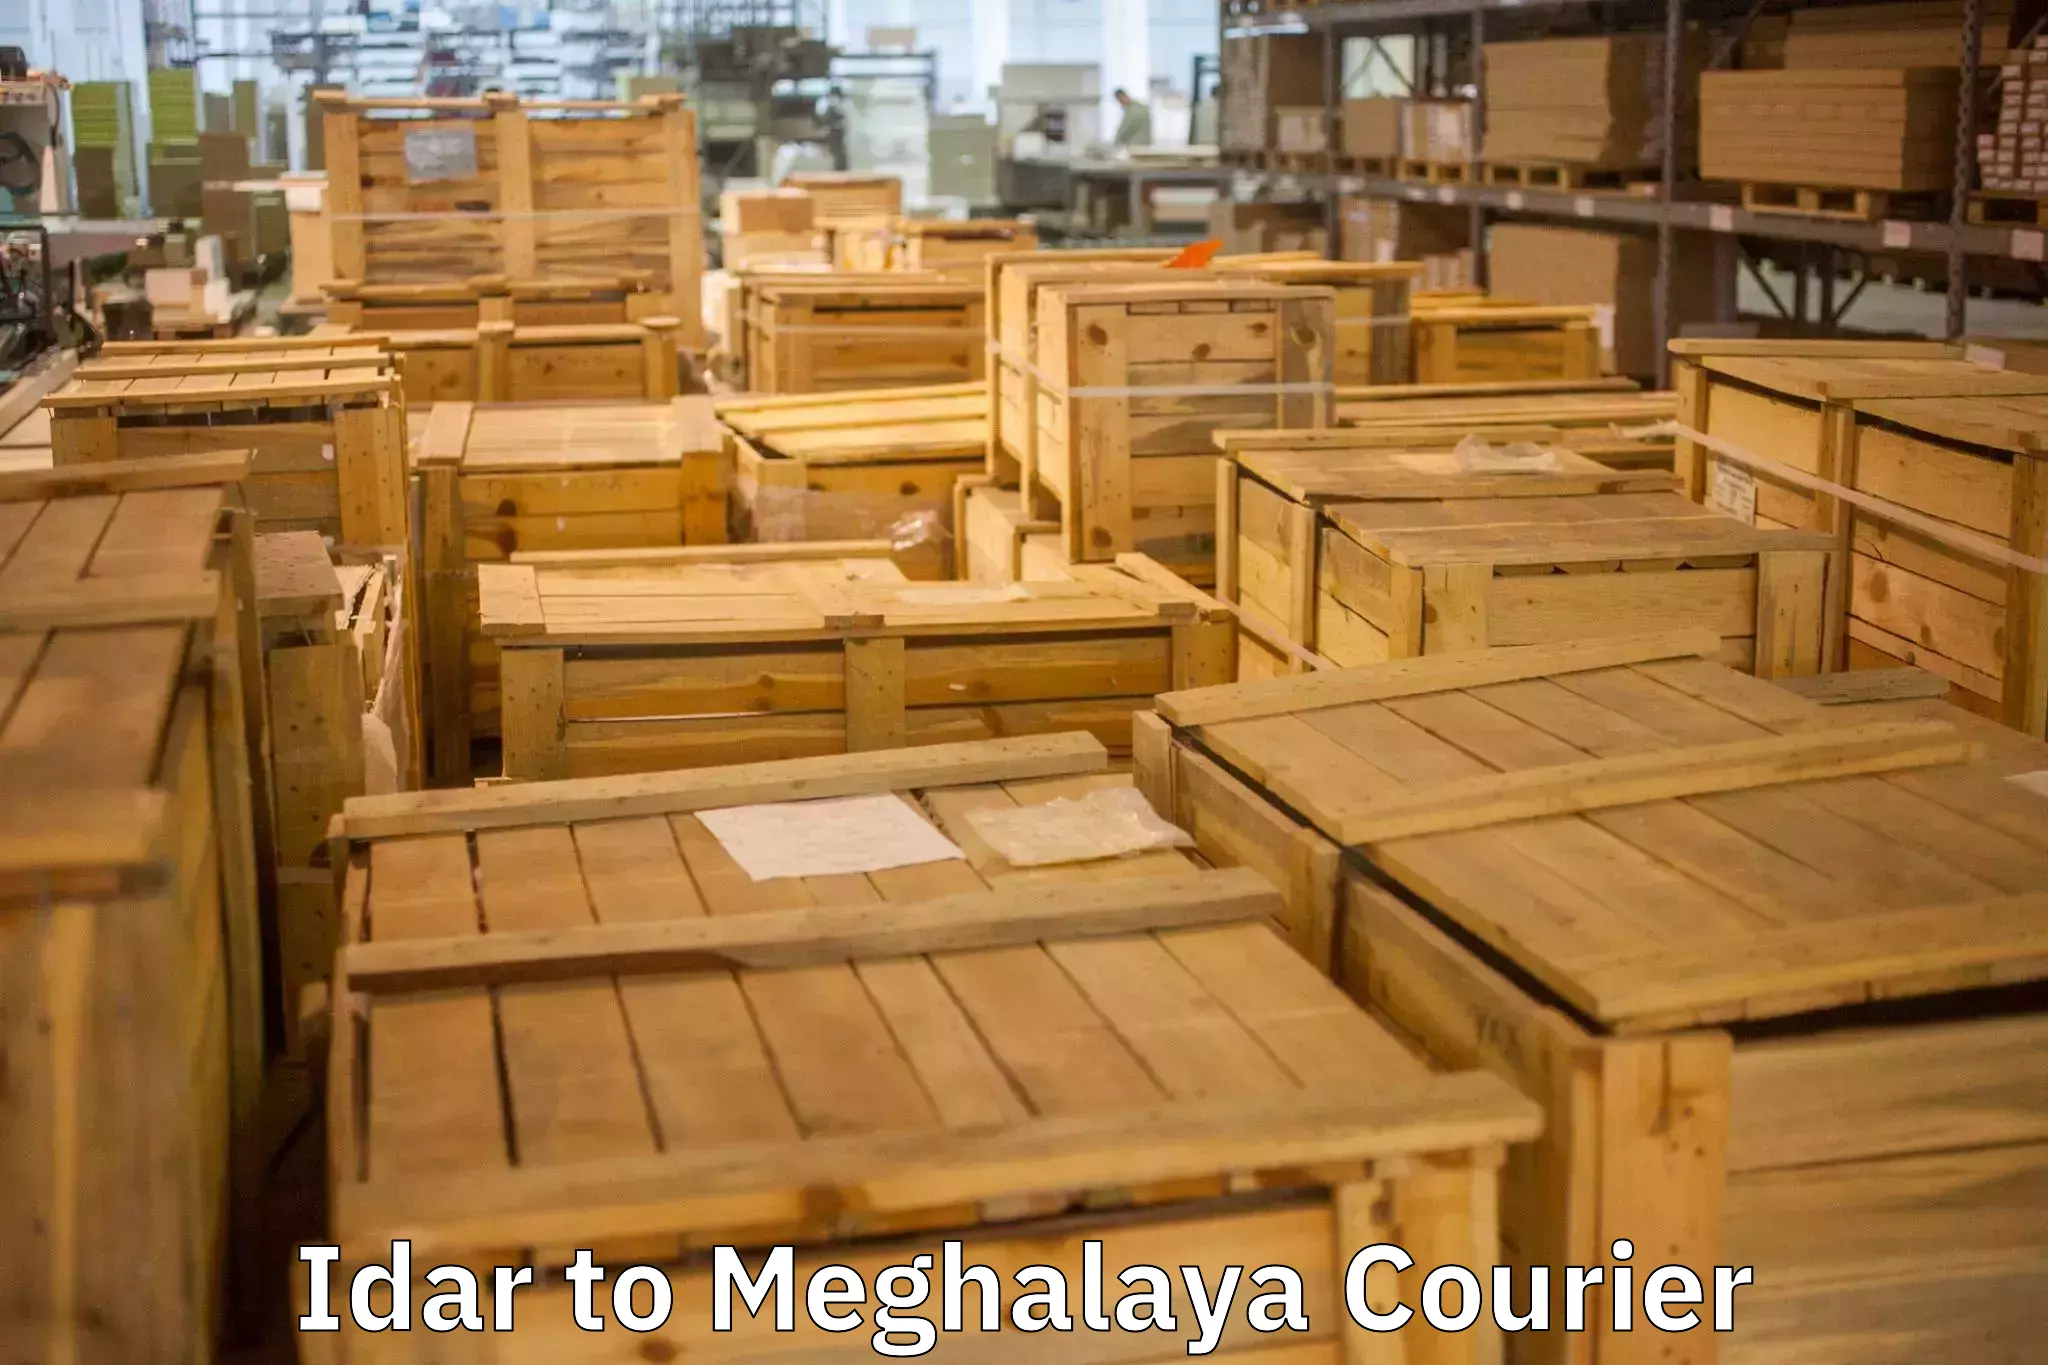 Trusted moving company Idar to Meghalaya